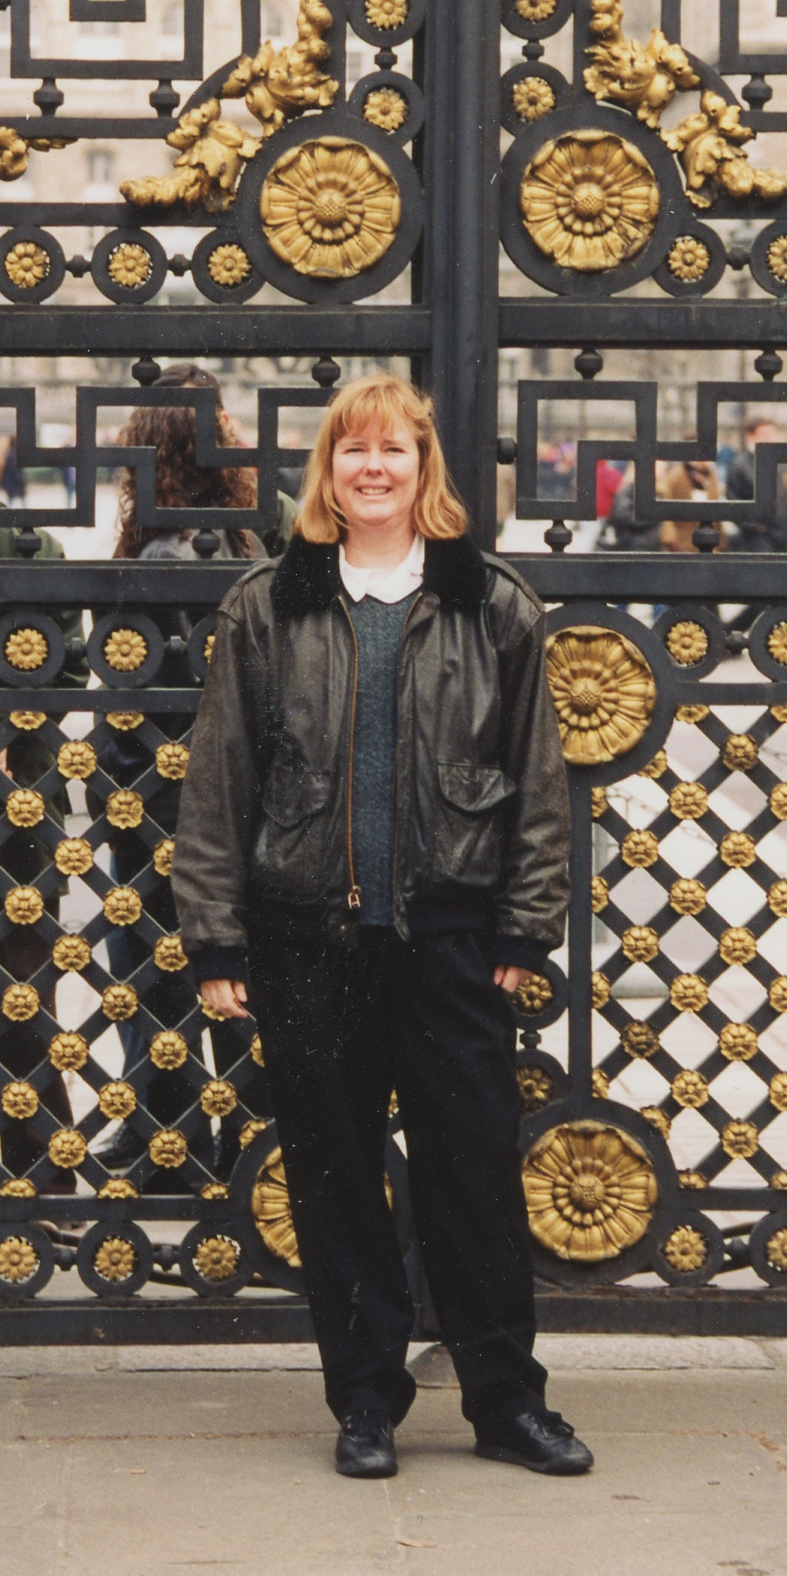 Susan Niehans in front of the Palais de Justice in Paris
Photo ©1997 Ann James Massey